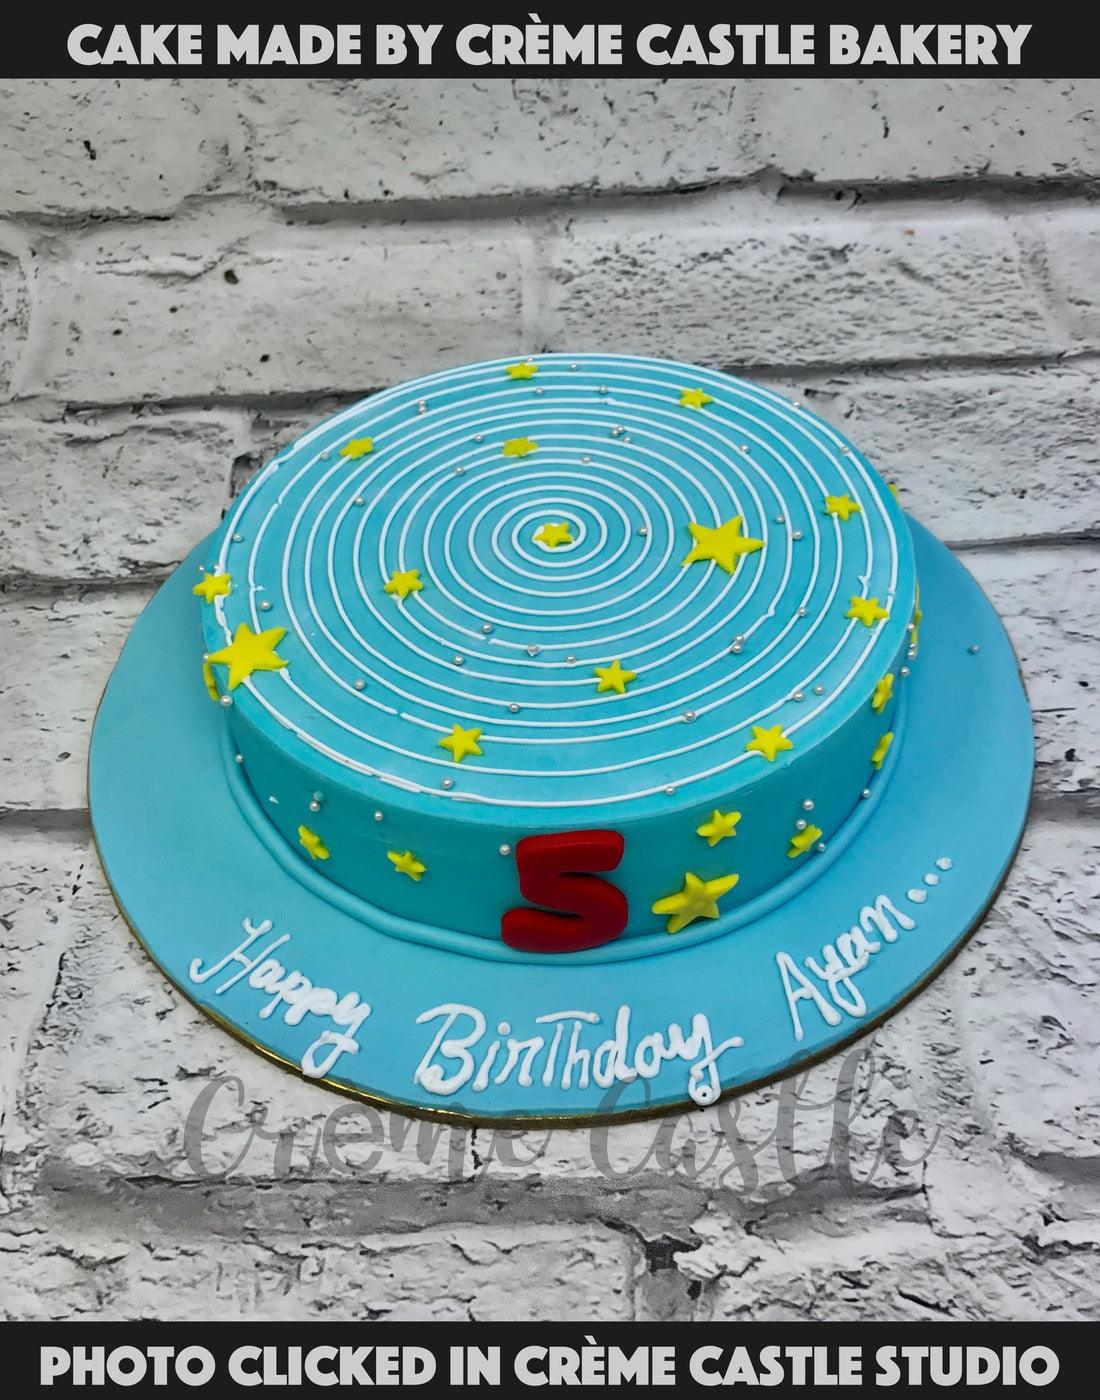 Ayaan Mickey's Team Birthday Cake - mirasdialacake